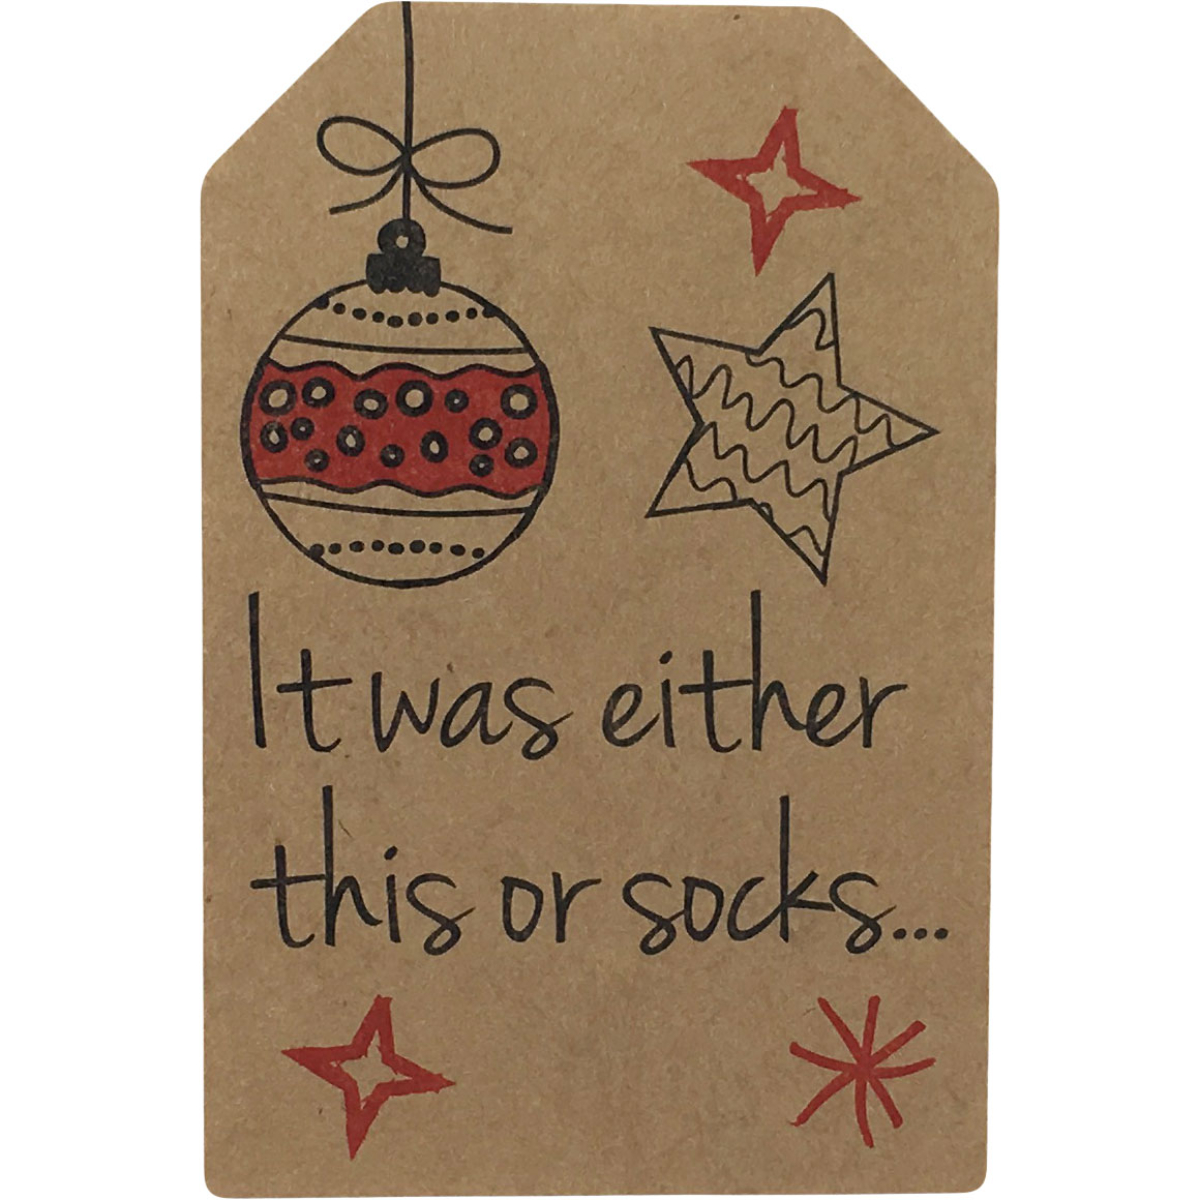 Pun and Fun Christmas Tags for Gifts 